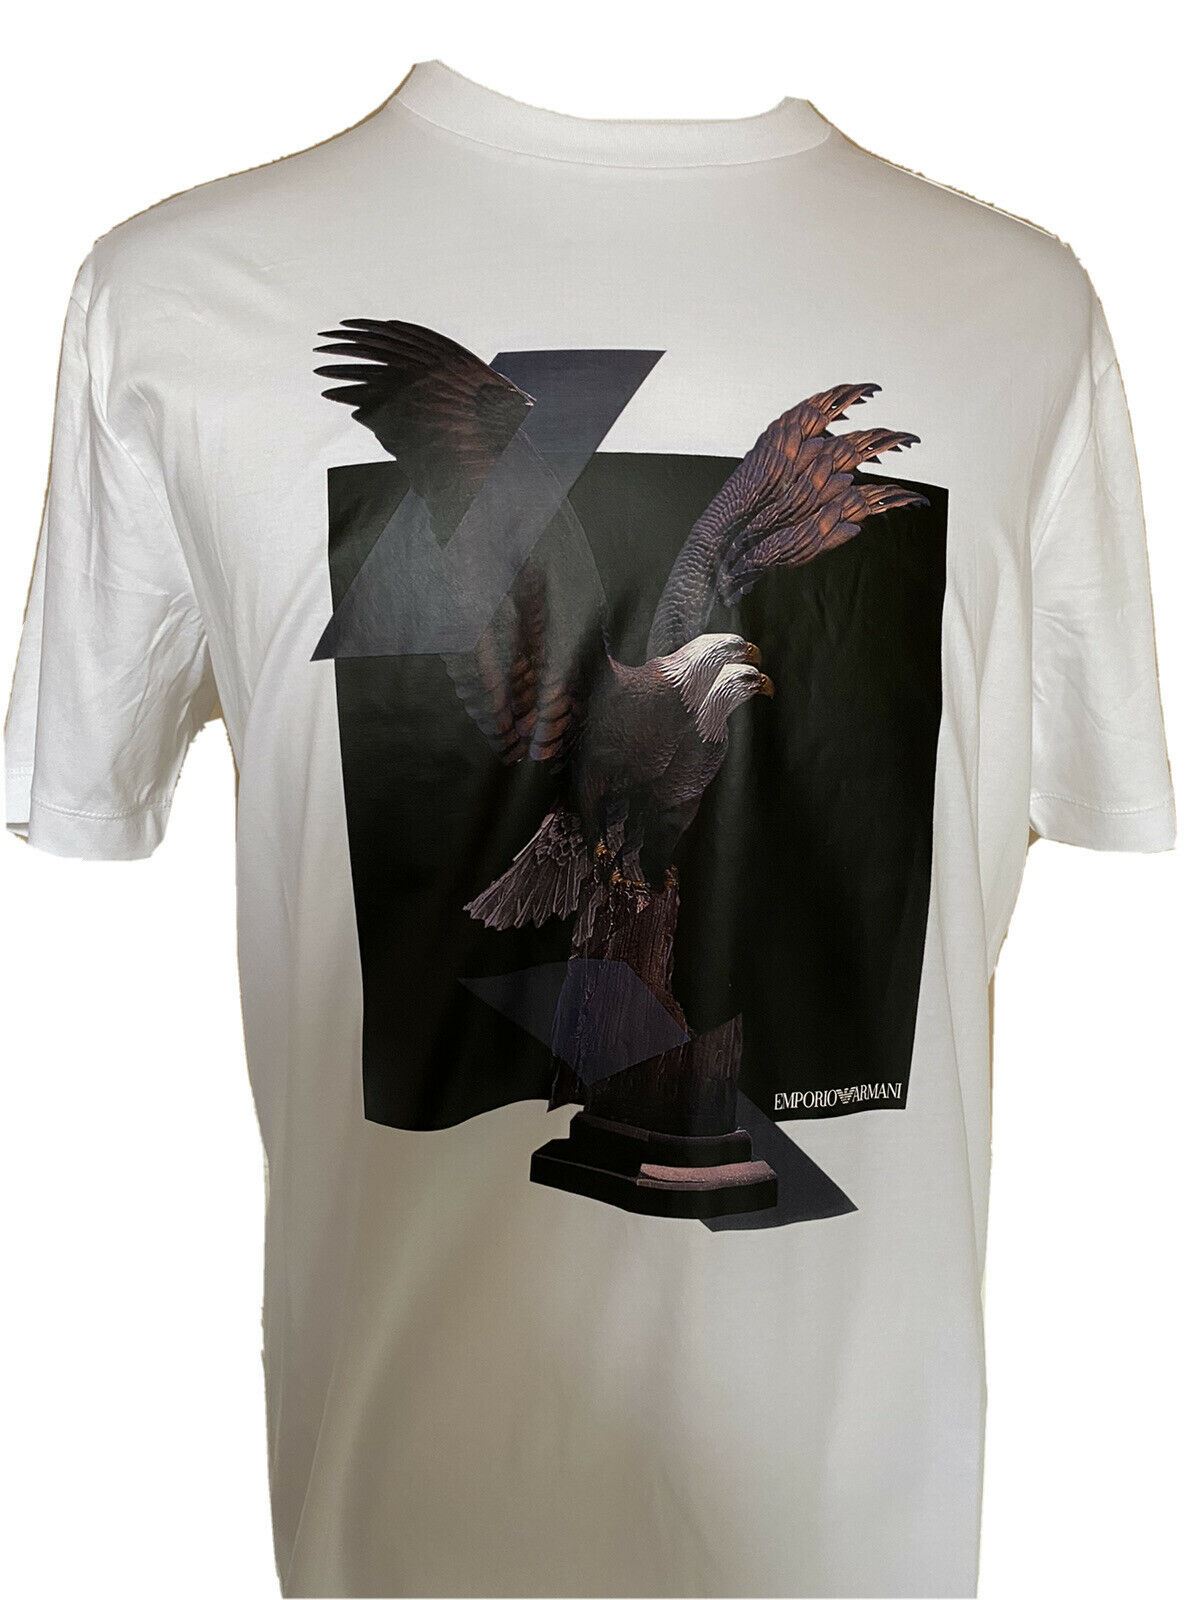 NWT $225 Emporio Armani Белая футболка с коротким рукавом и рисунком орла 3XL 3G1T70